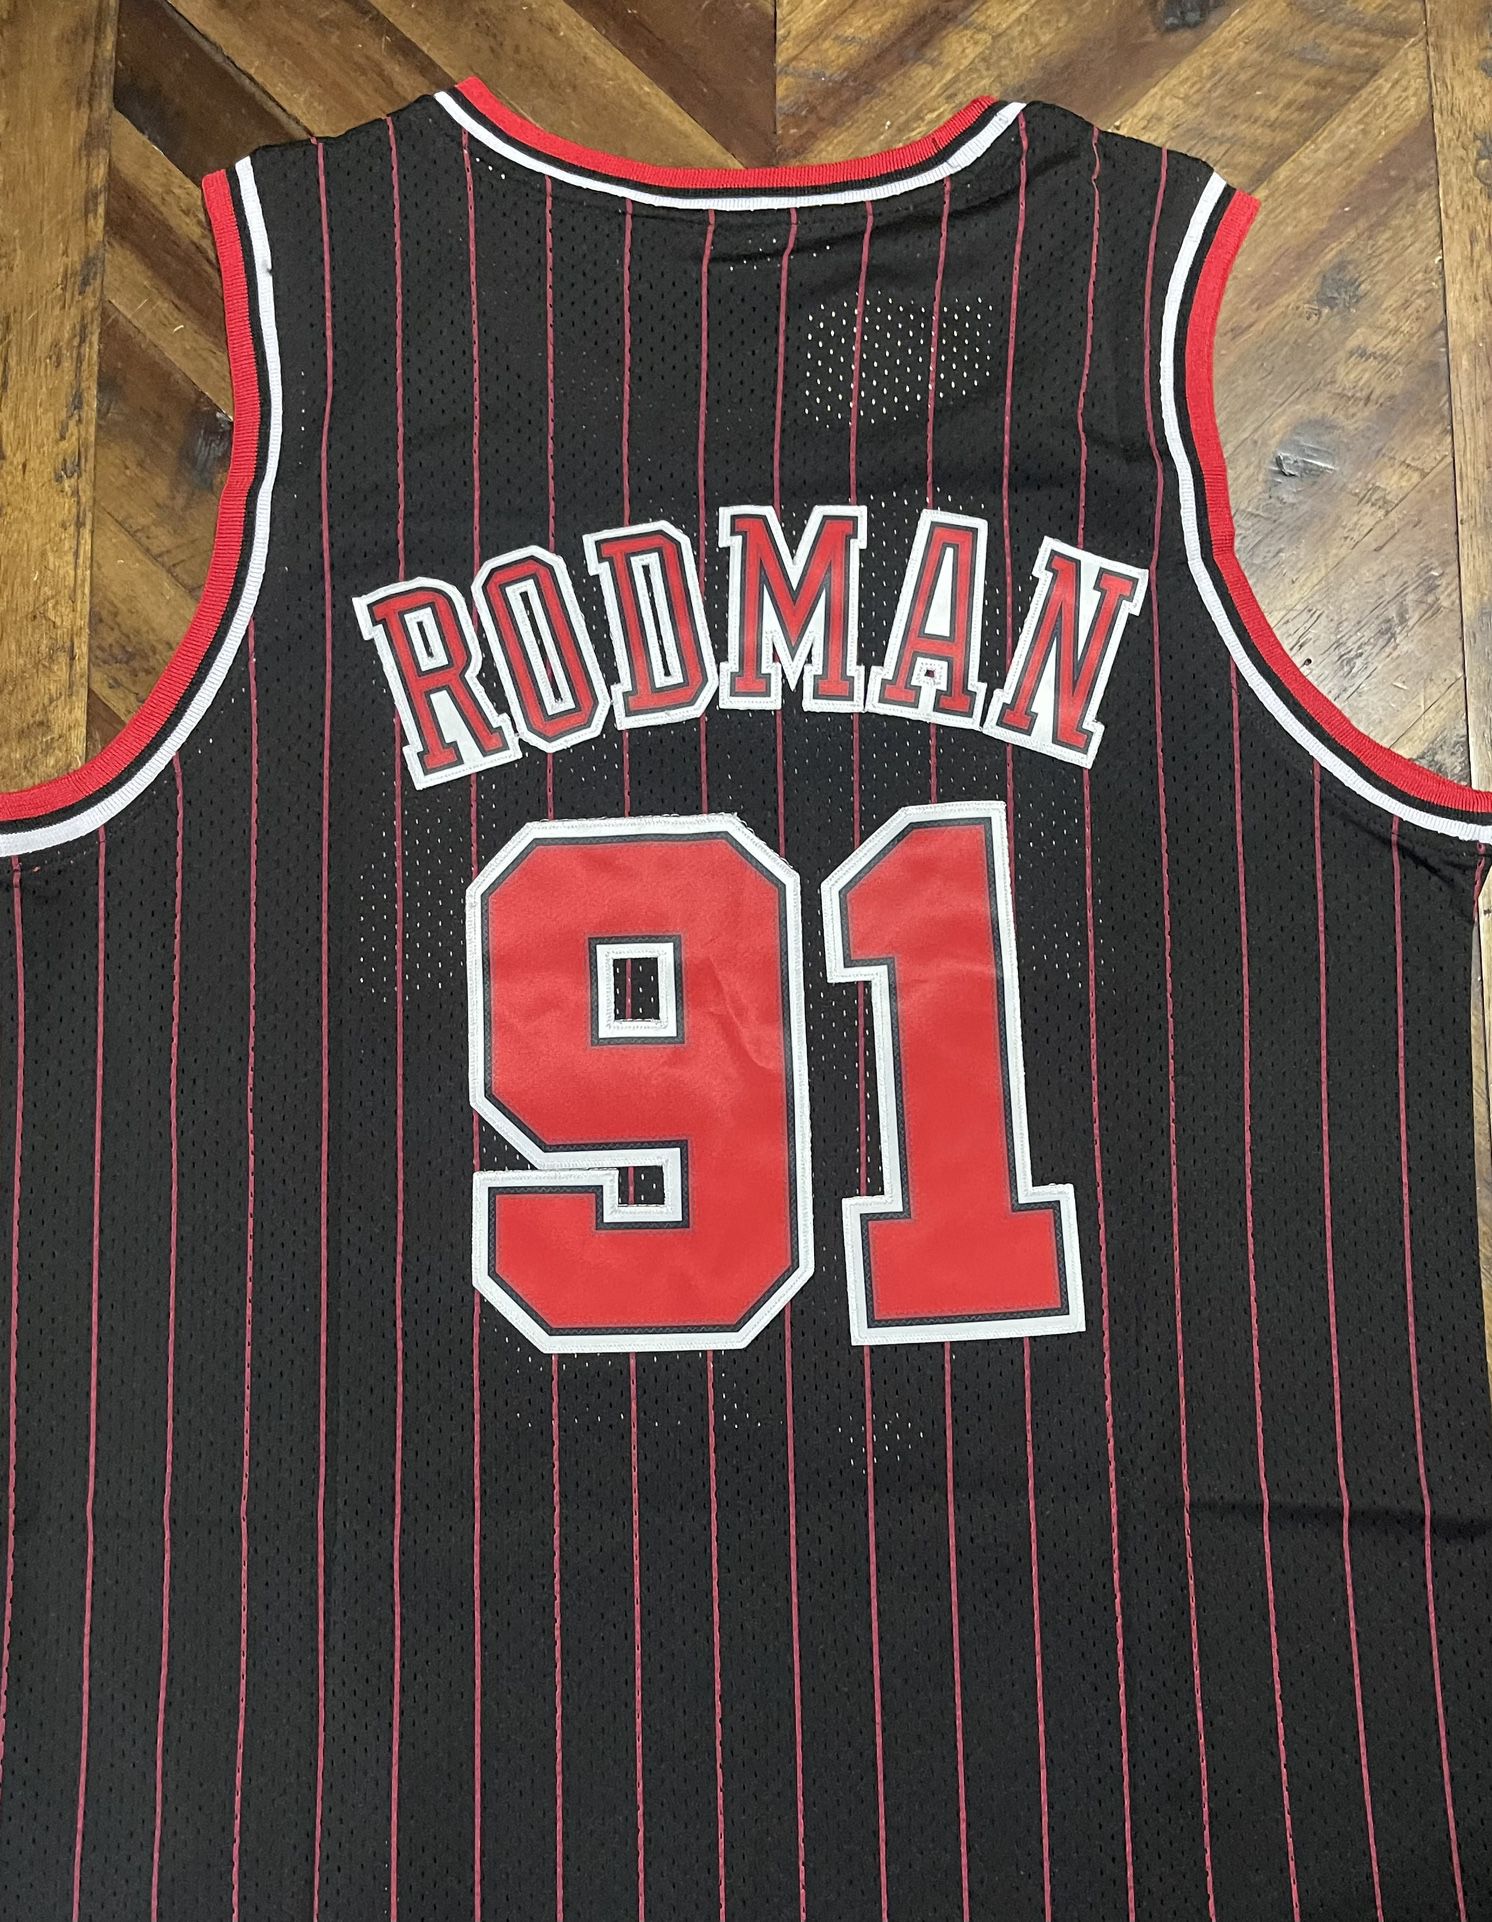 Rodman Men’s Jersey!!!!!